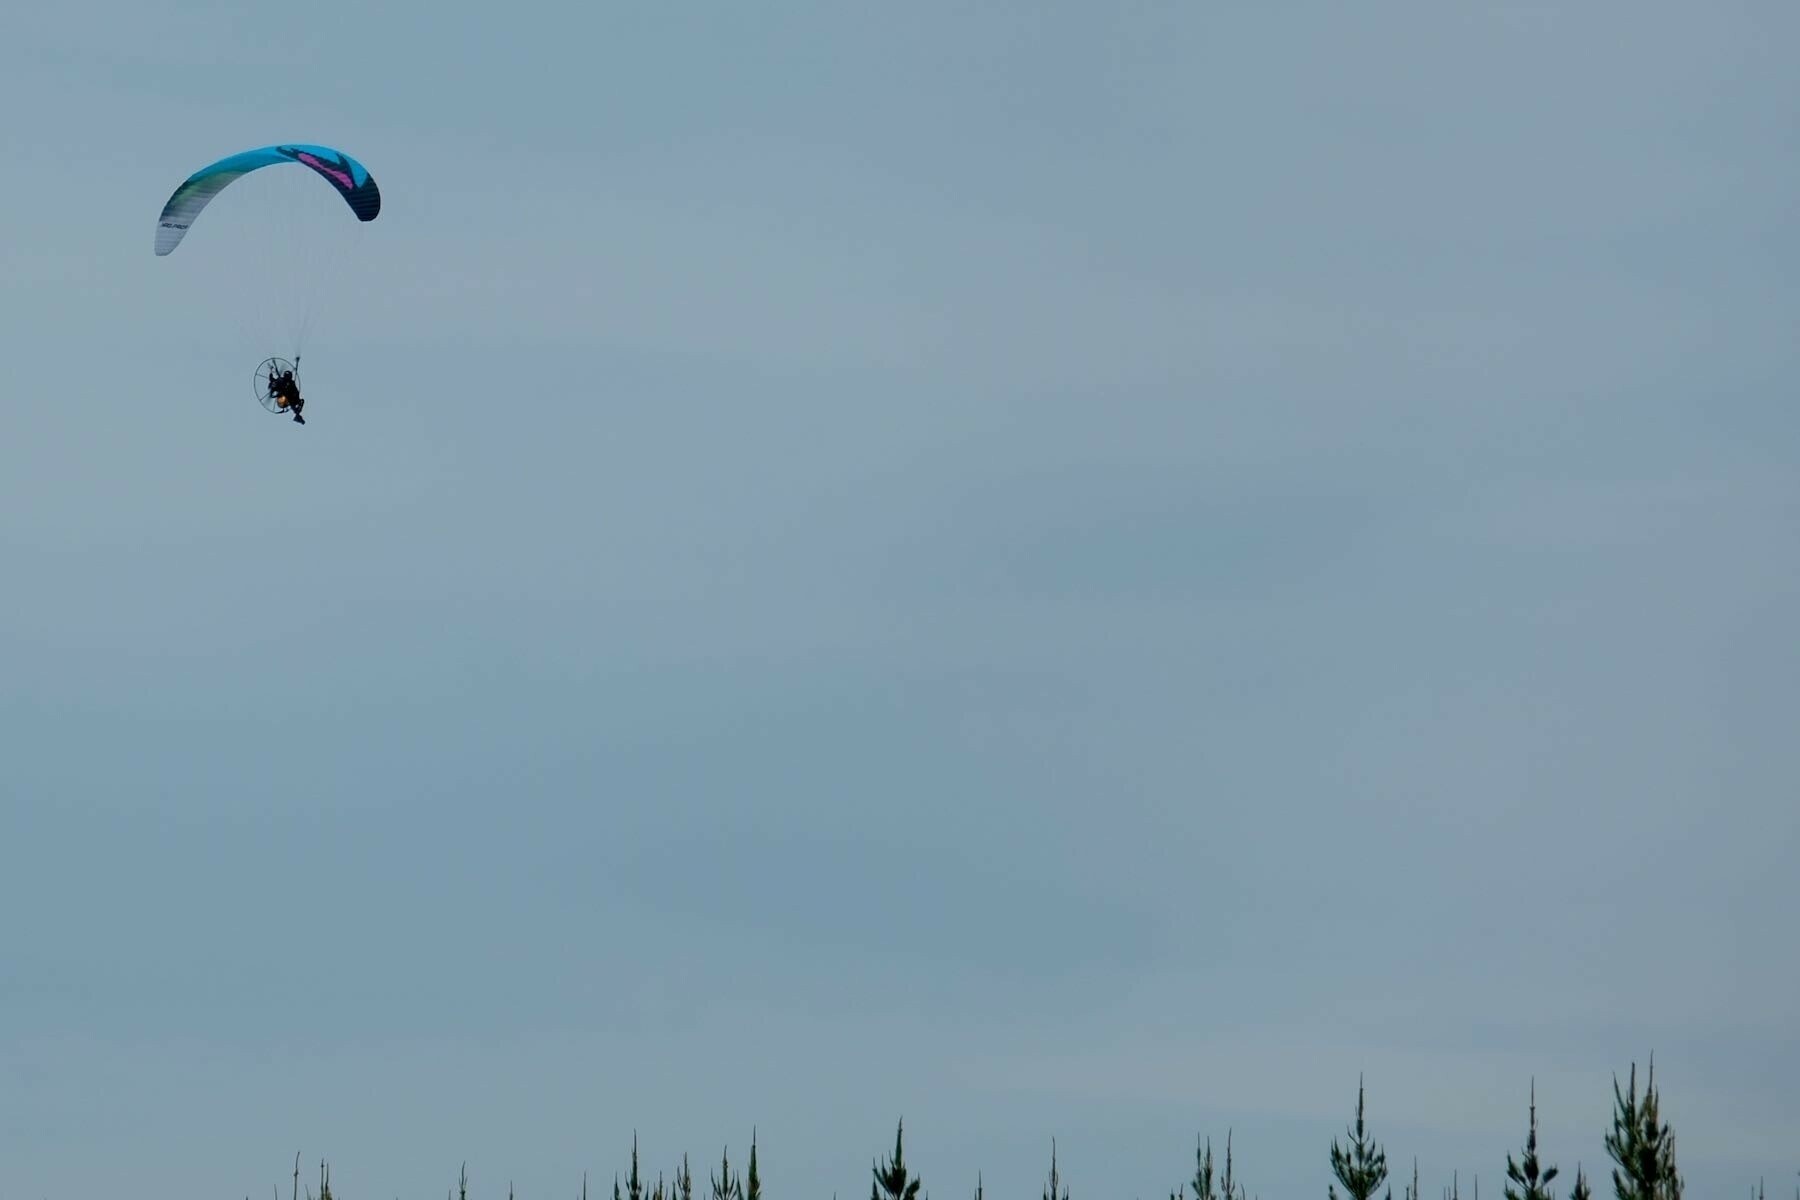 Microlight flyer below parachute near tree tops. 